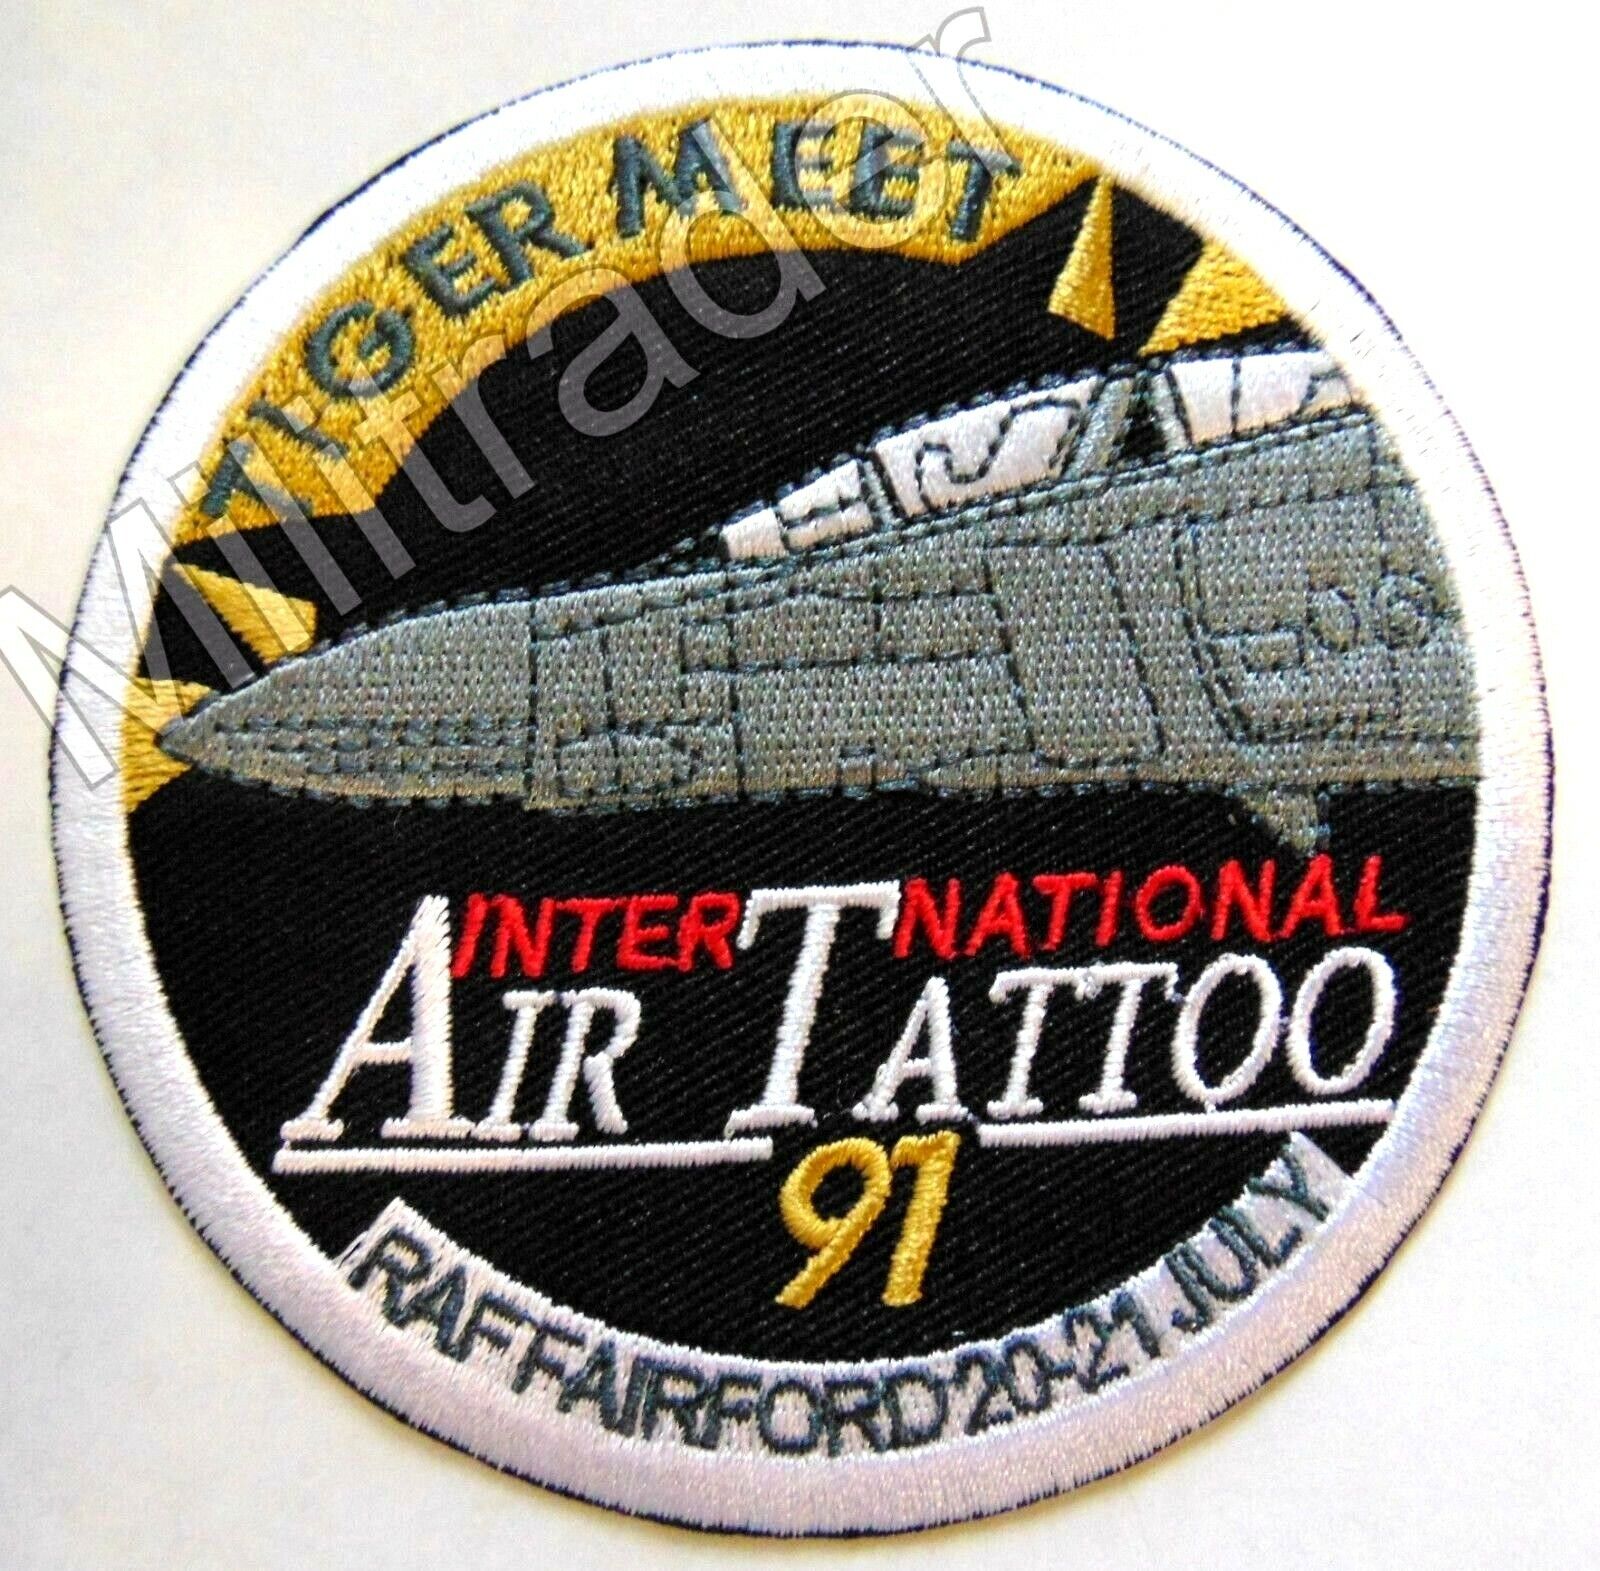 NATO Tiger Meet 1991 (Air Tattoo International) RAF Fairford Patch 1